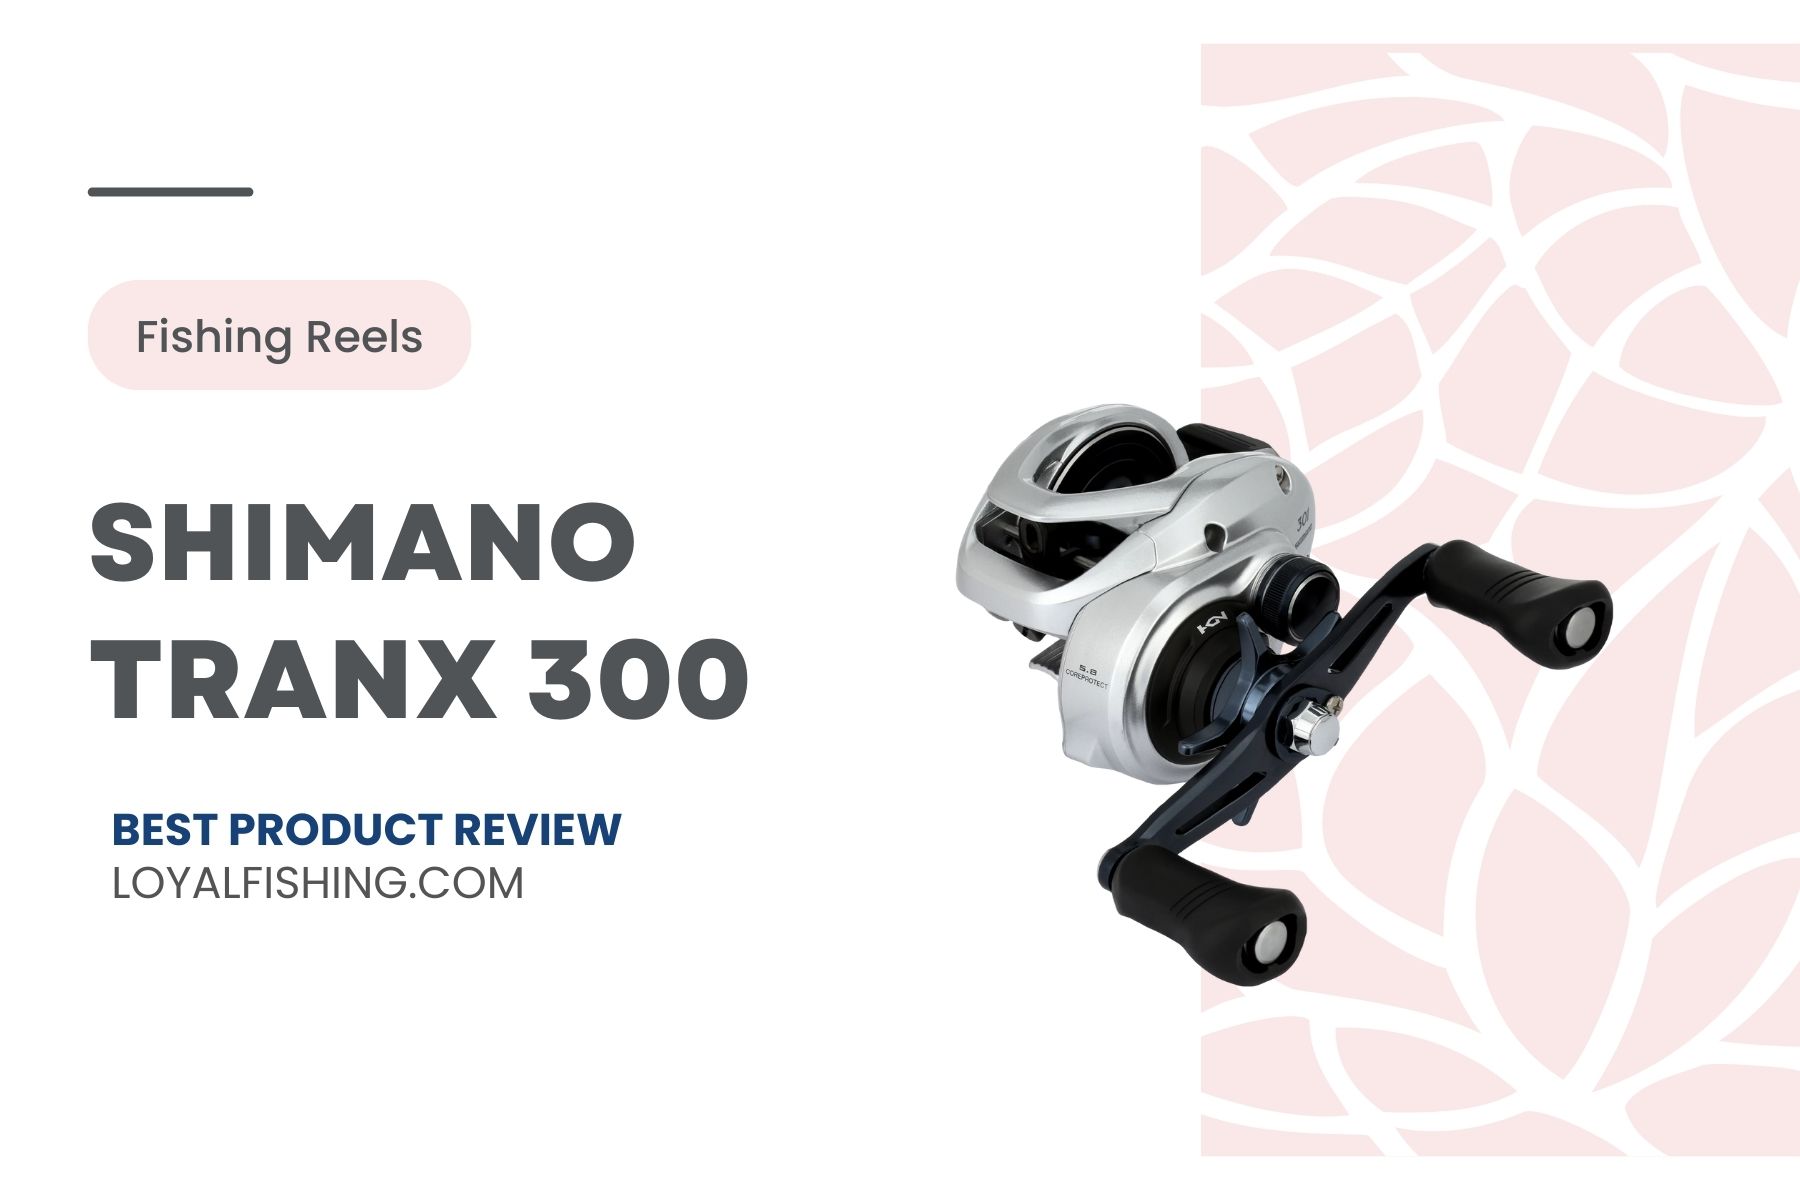 Shimano Tranx 300